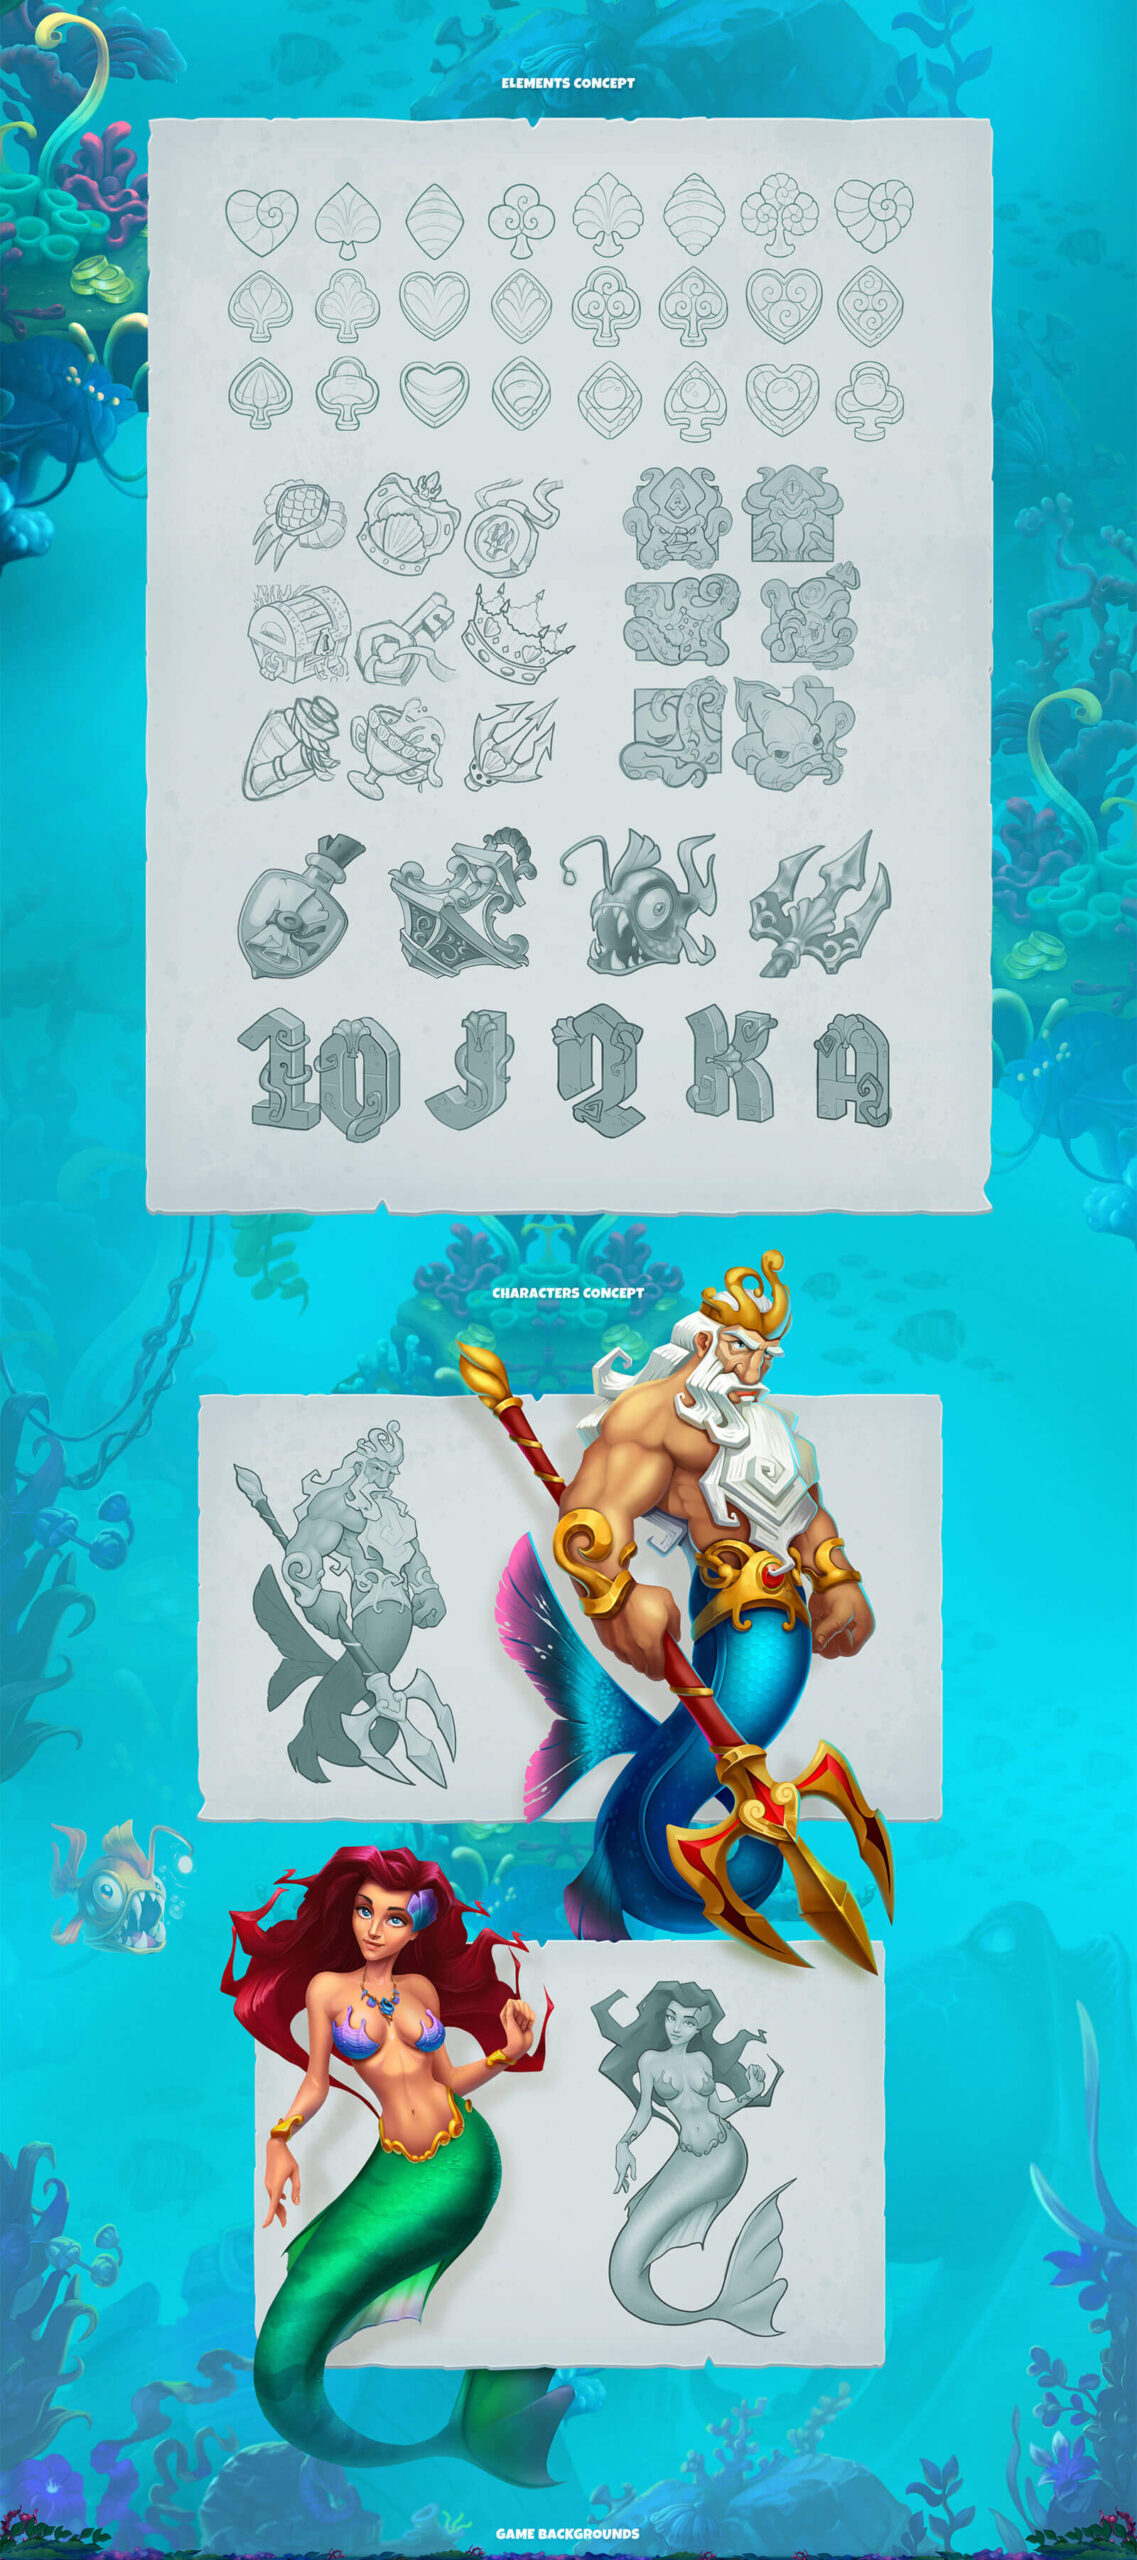 Ocean Kingdom slot machine concept art